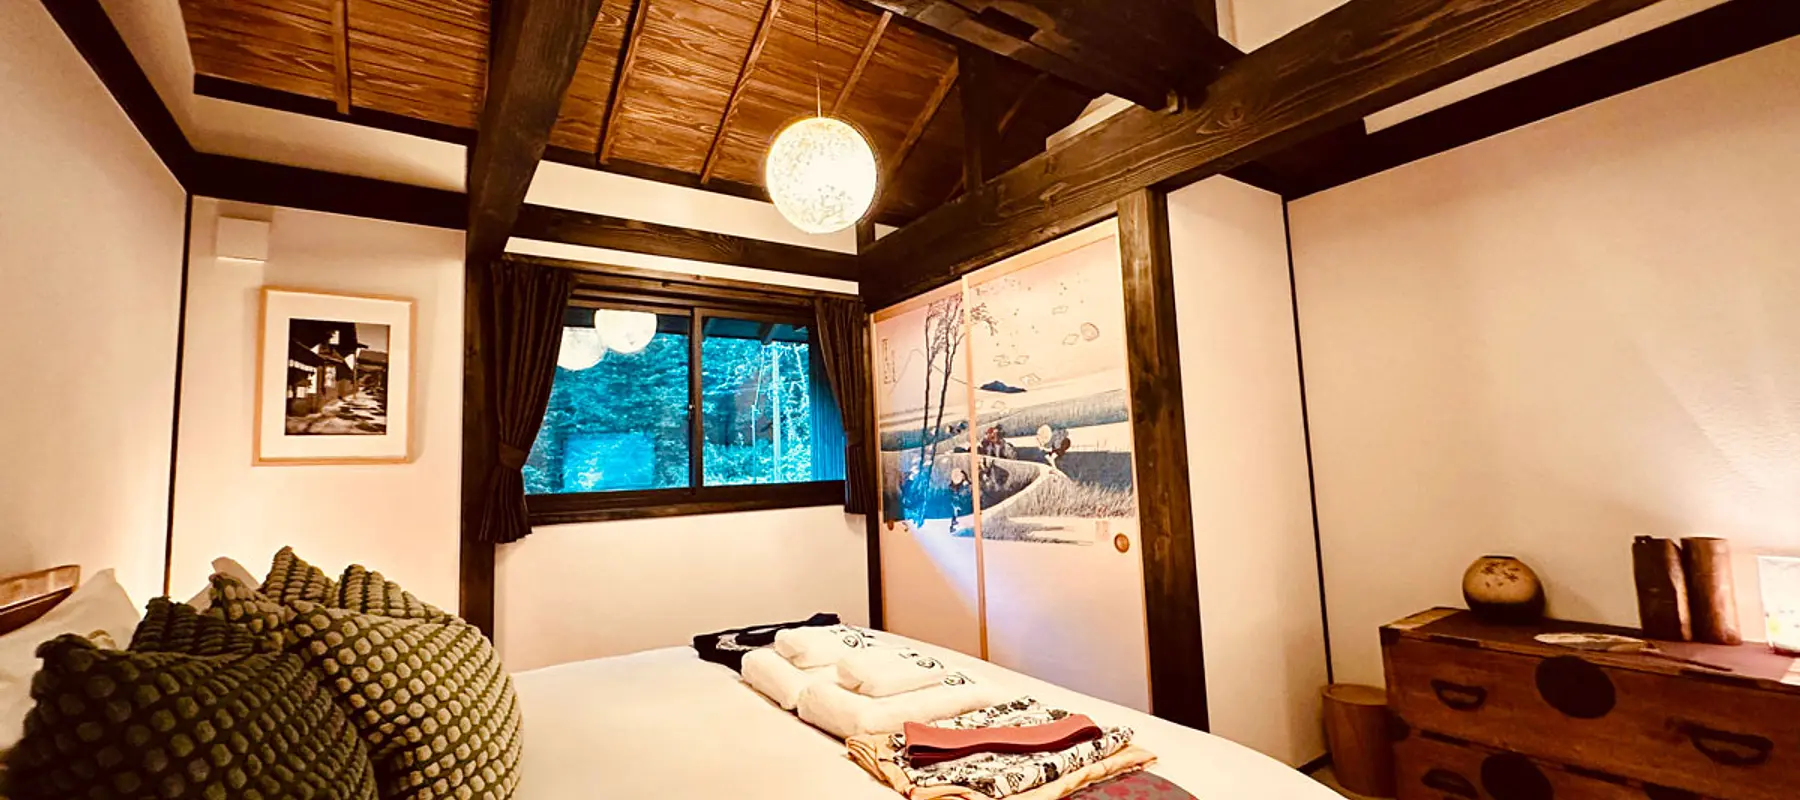 Shiki Bedroom Over Bed To Fusuma Warm